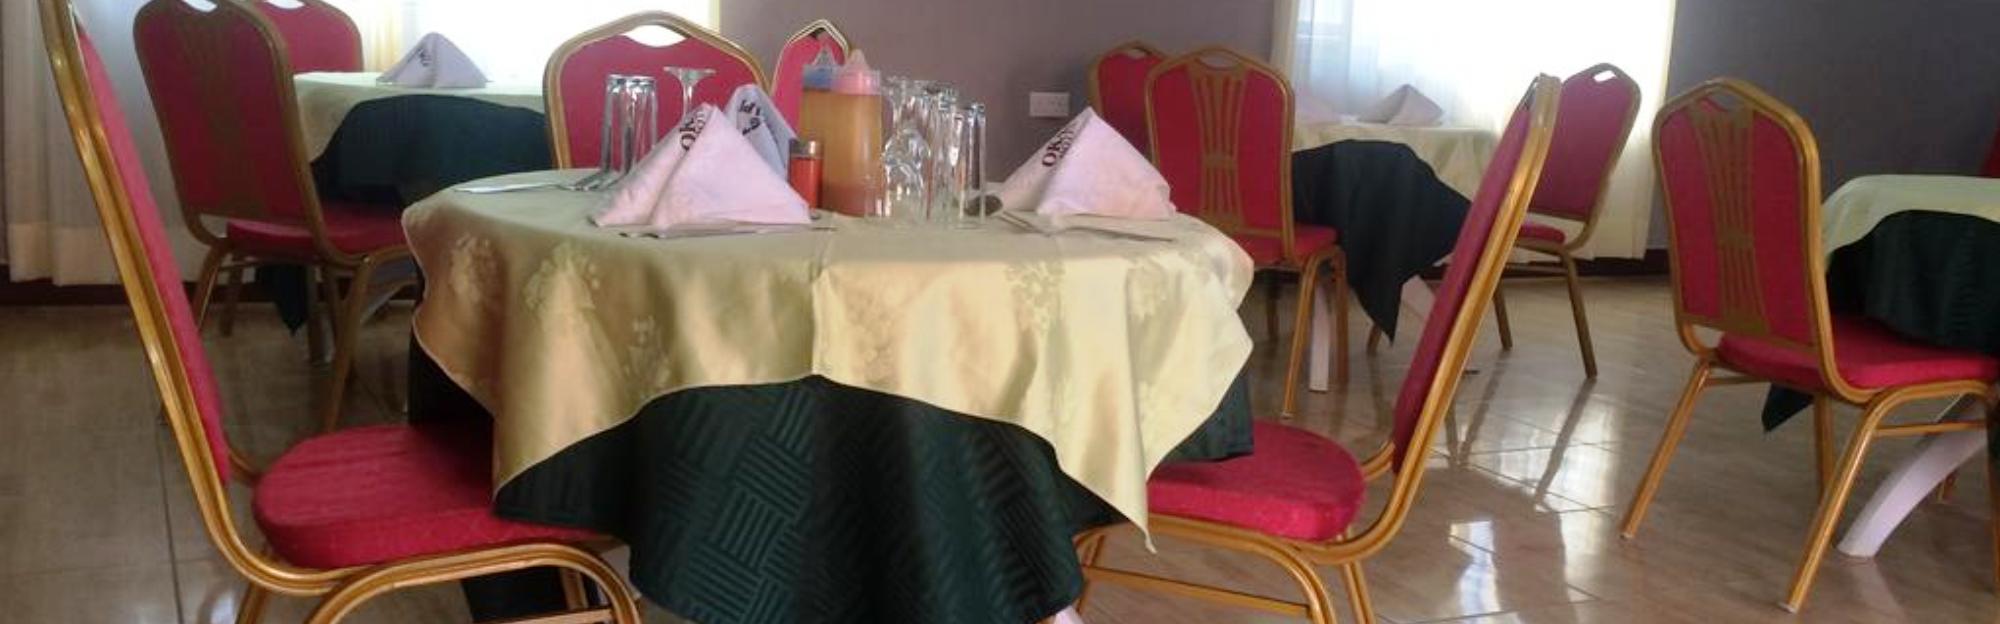 Okapi Hotel Conferences & Weddings